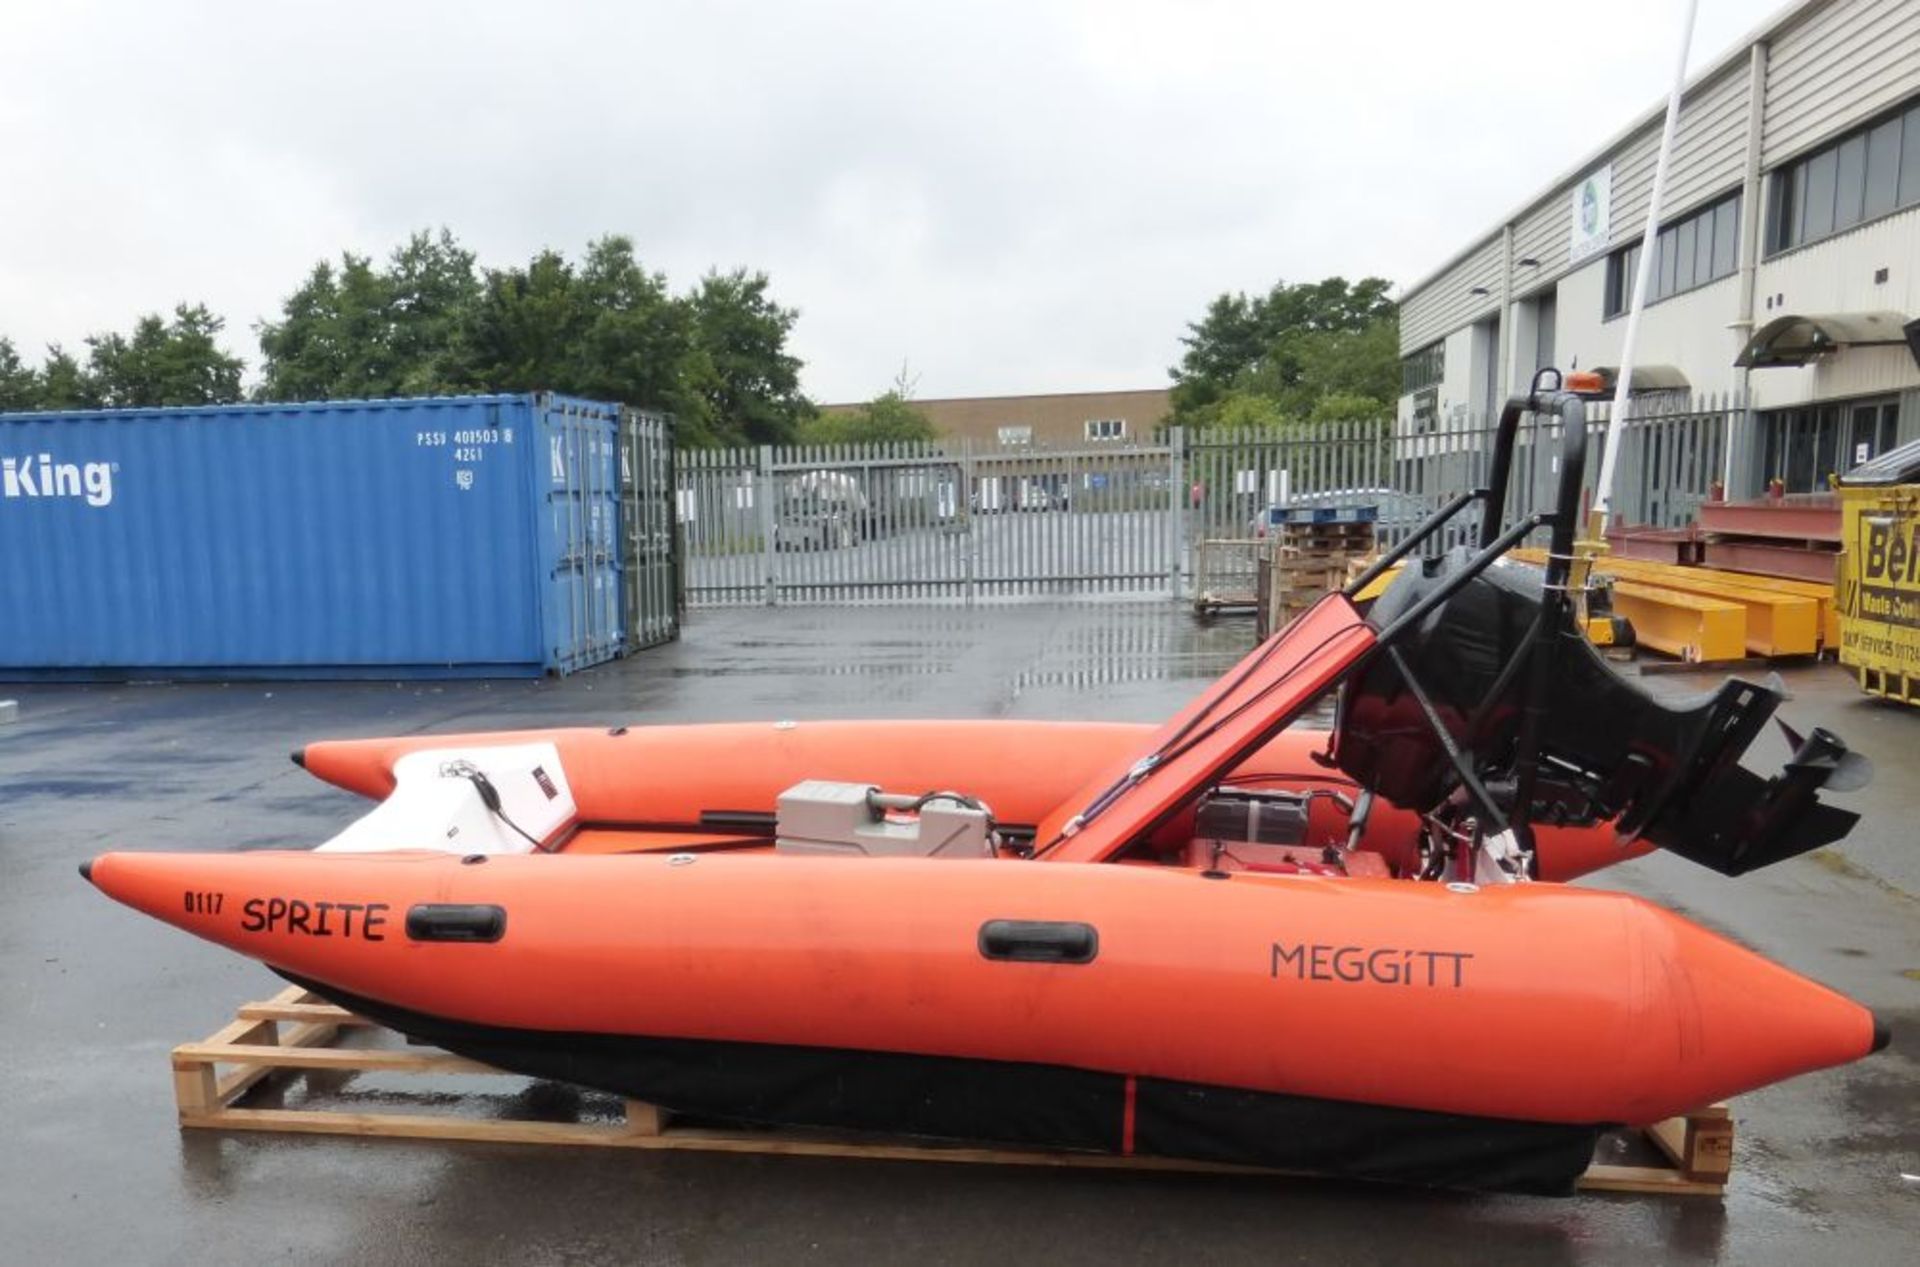 * Sprite R.I.B with Meggitt 40HP Outboard. A Sprite Rigid Inflatable Boat, Tunnel Hull, Meggitt